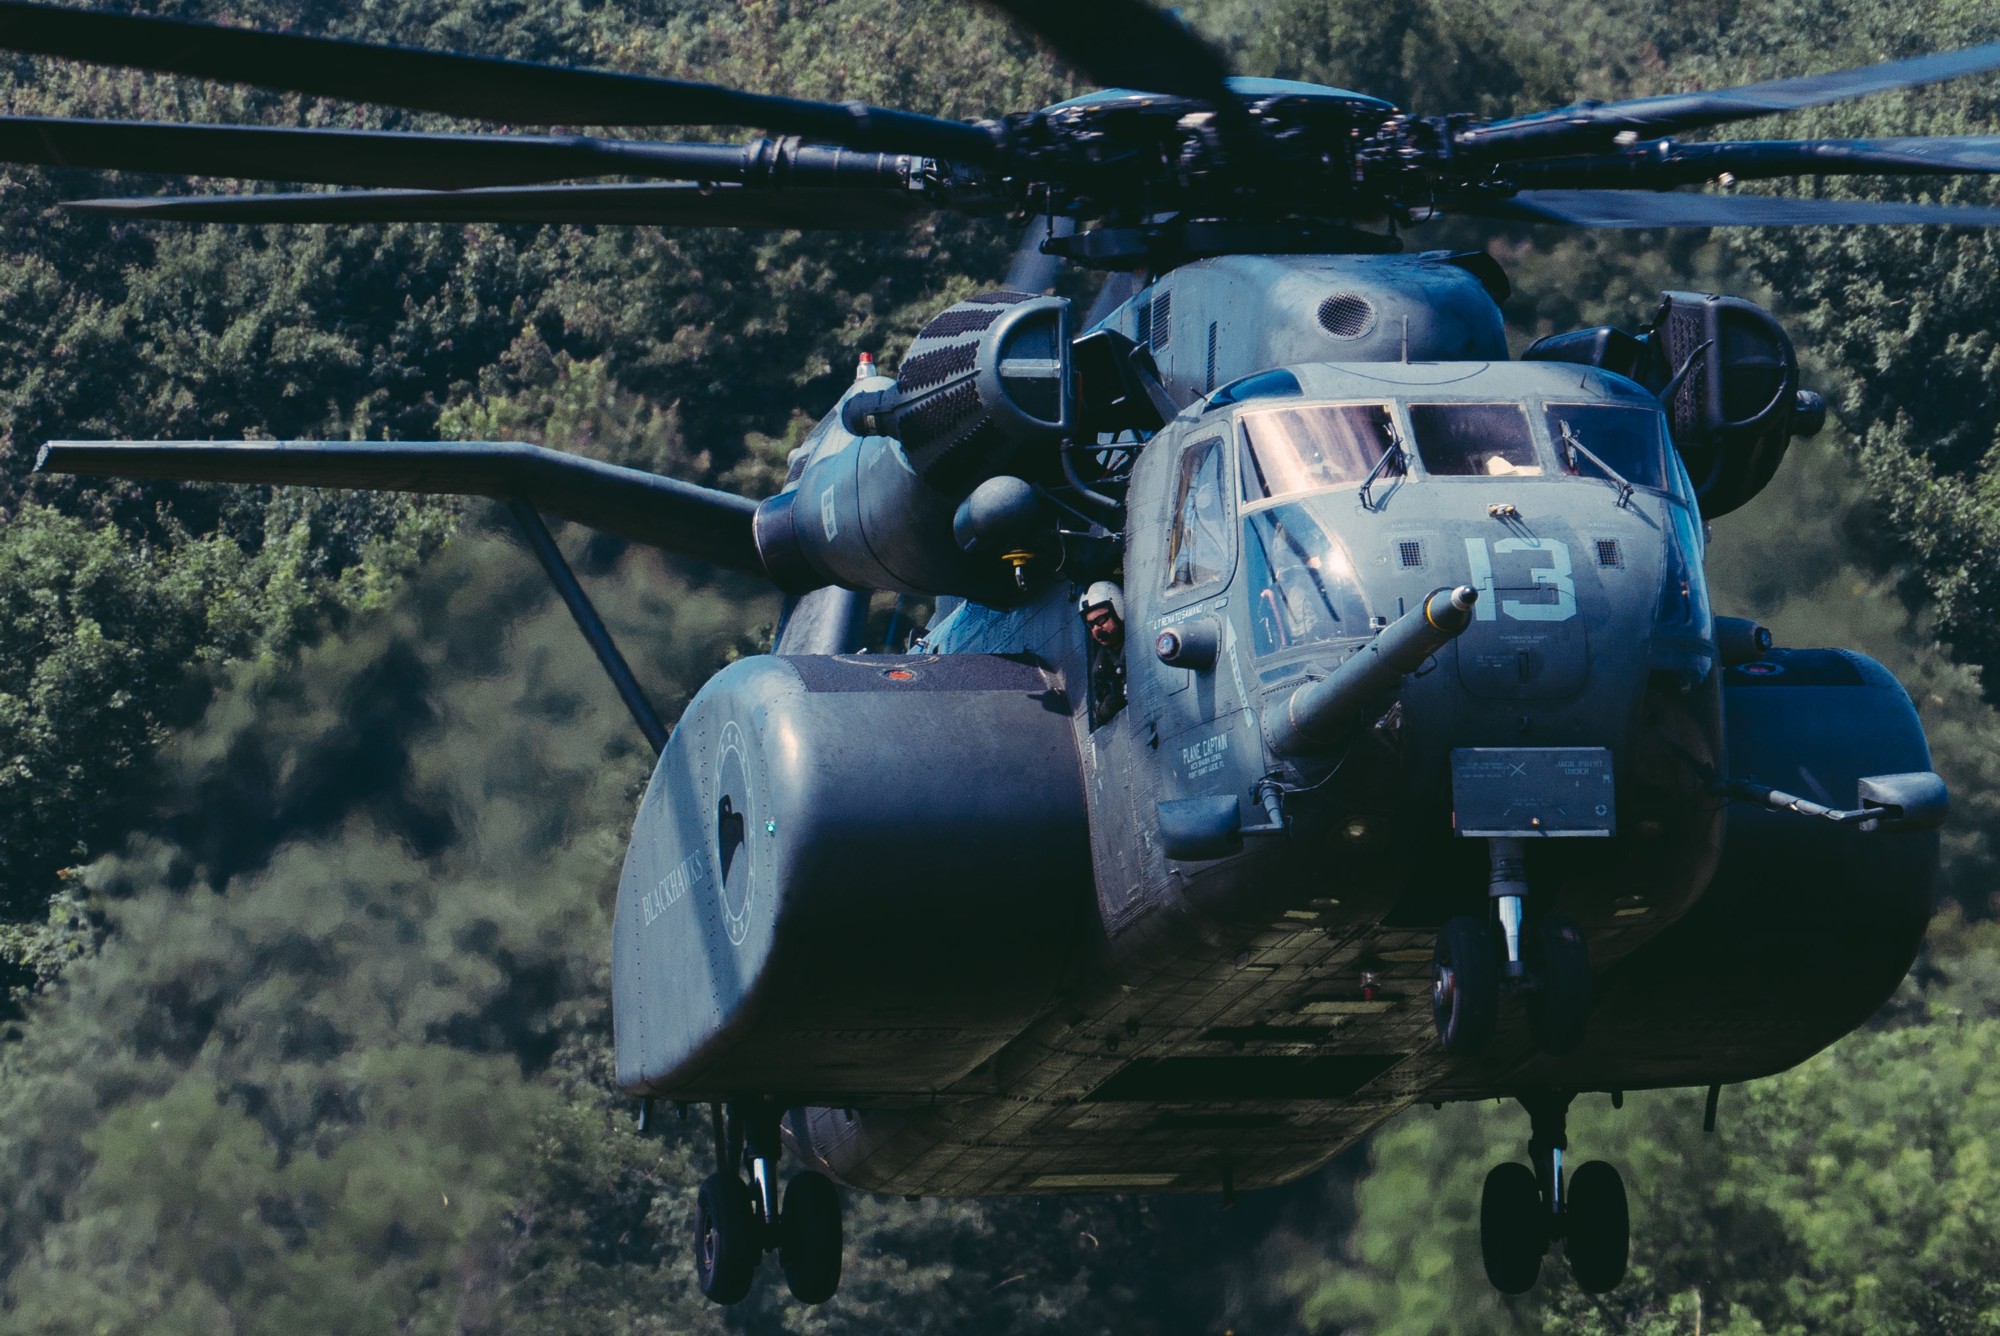 hm-15 blackhawks helicopter mine countermeasures squadron navy mh-53e sea dragon 30 camp dawson